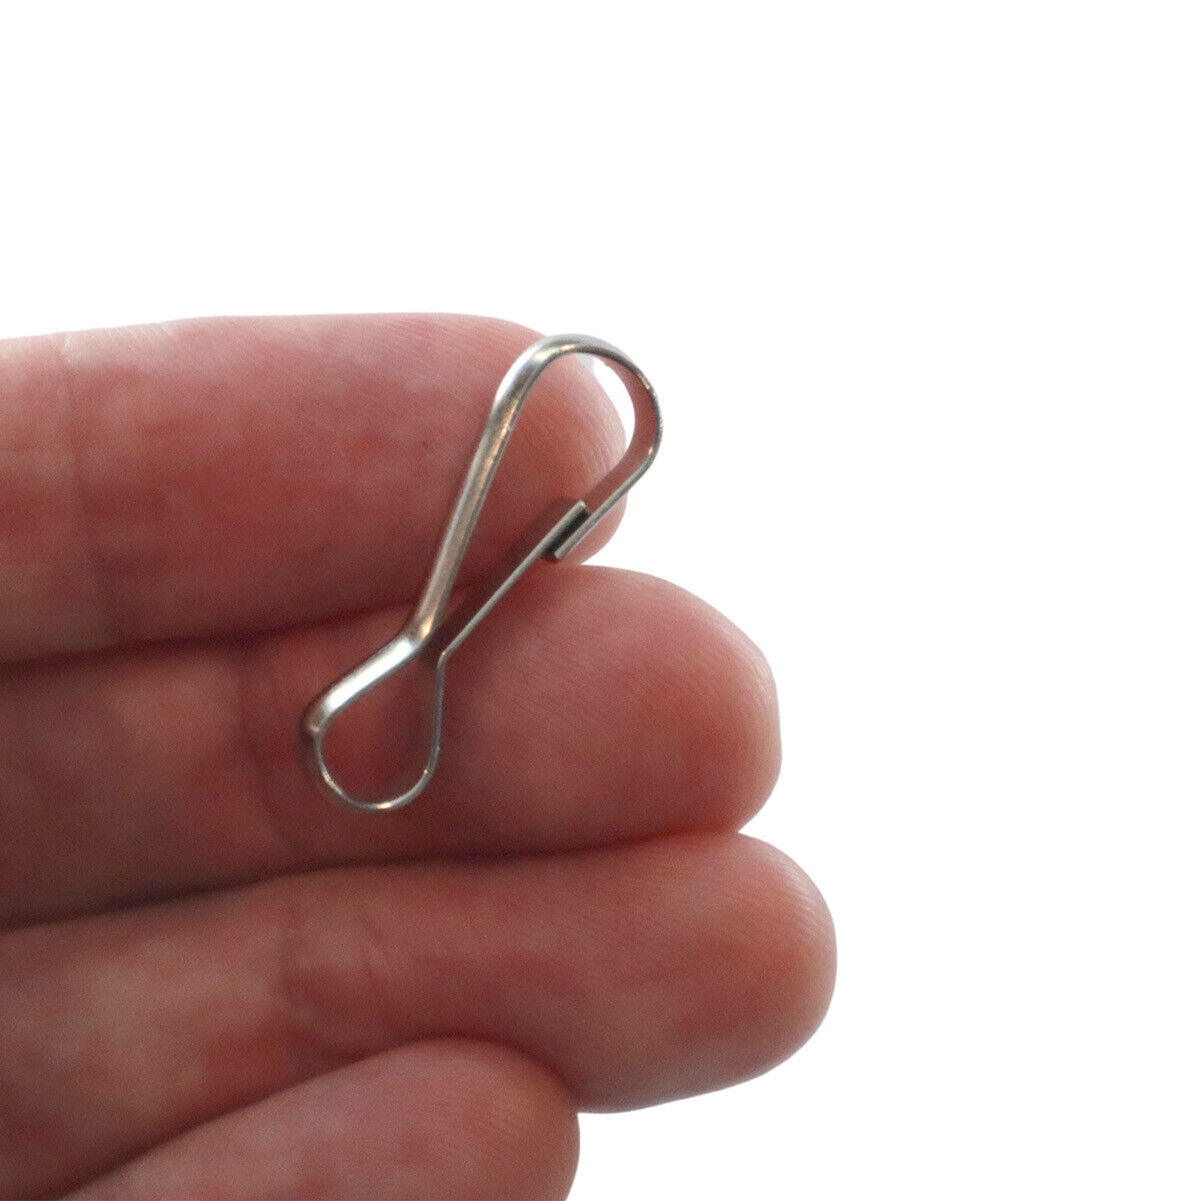 25 Small Metal J Hook Spring Clips for DIY Lanyards & Keychains - 1 1/4 Inch Specialist ID 7743-1020 - фотография #2